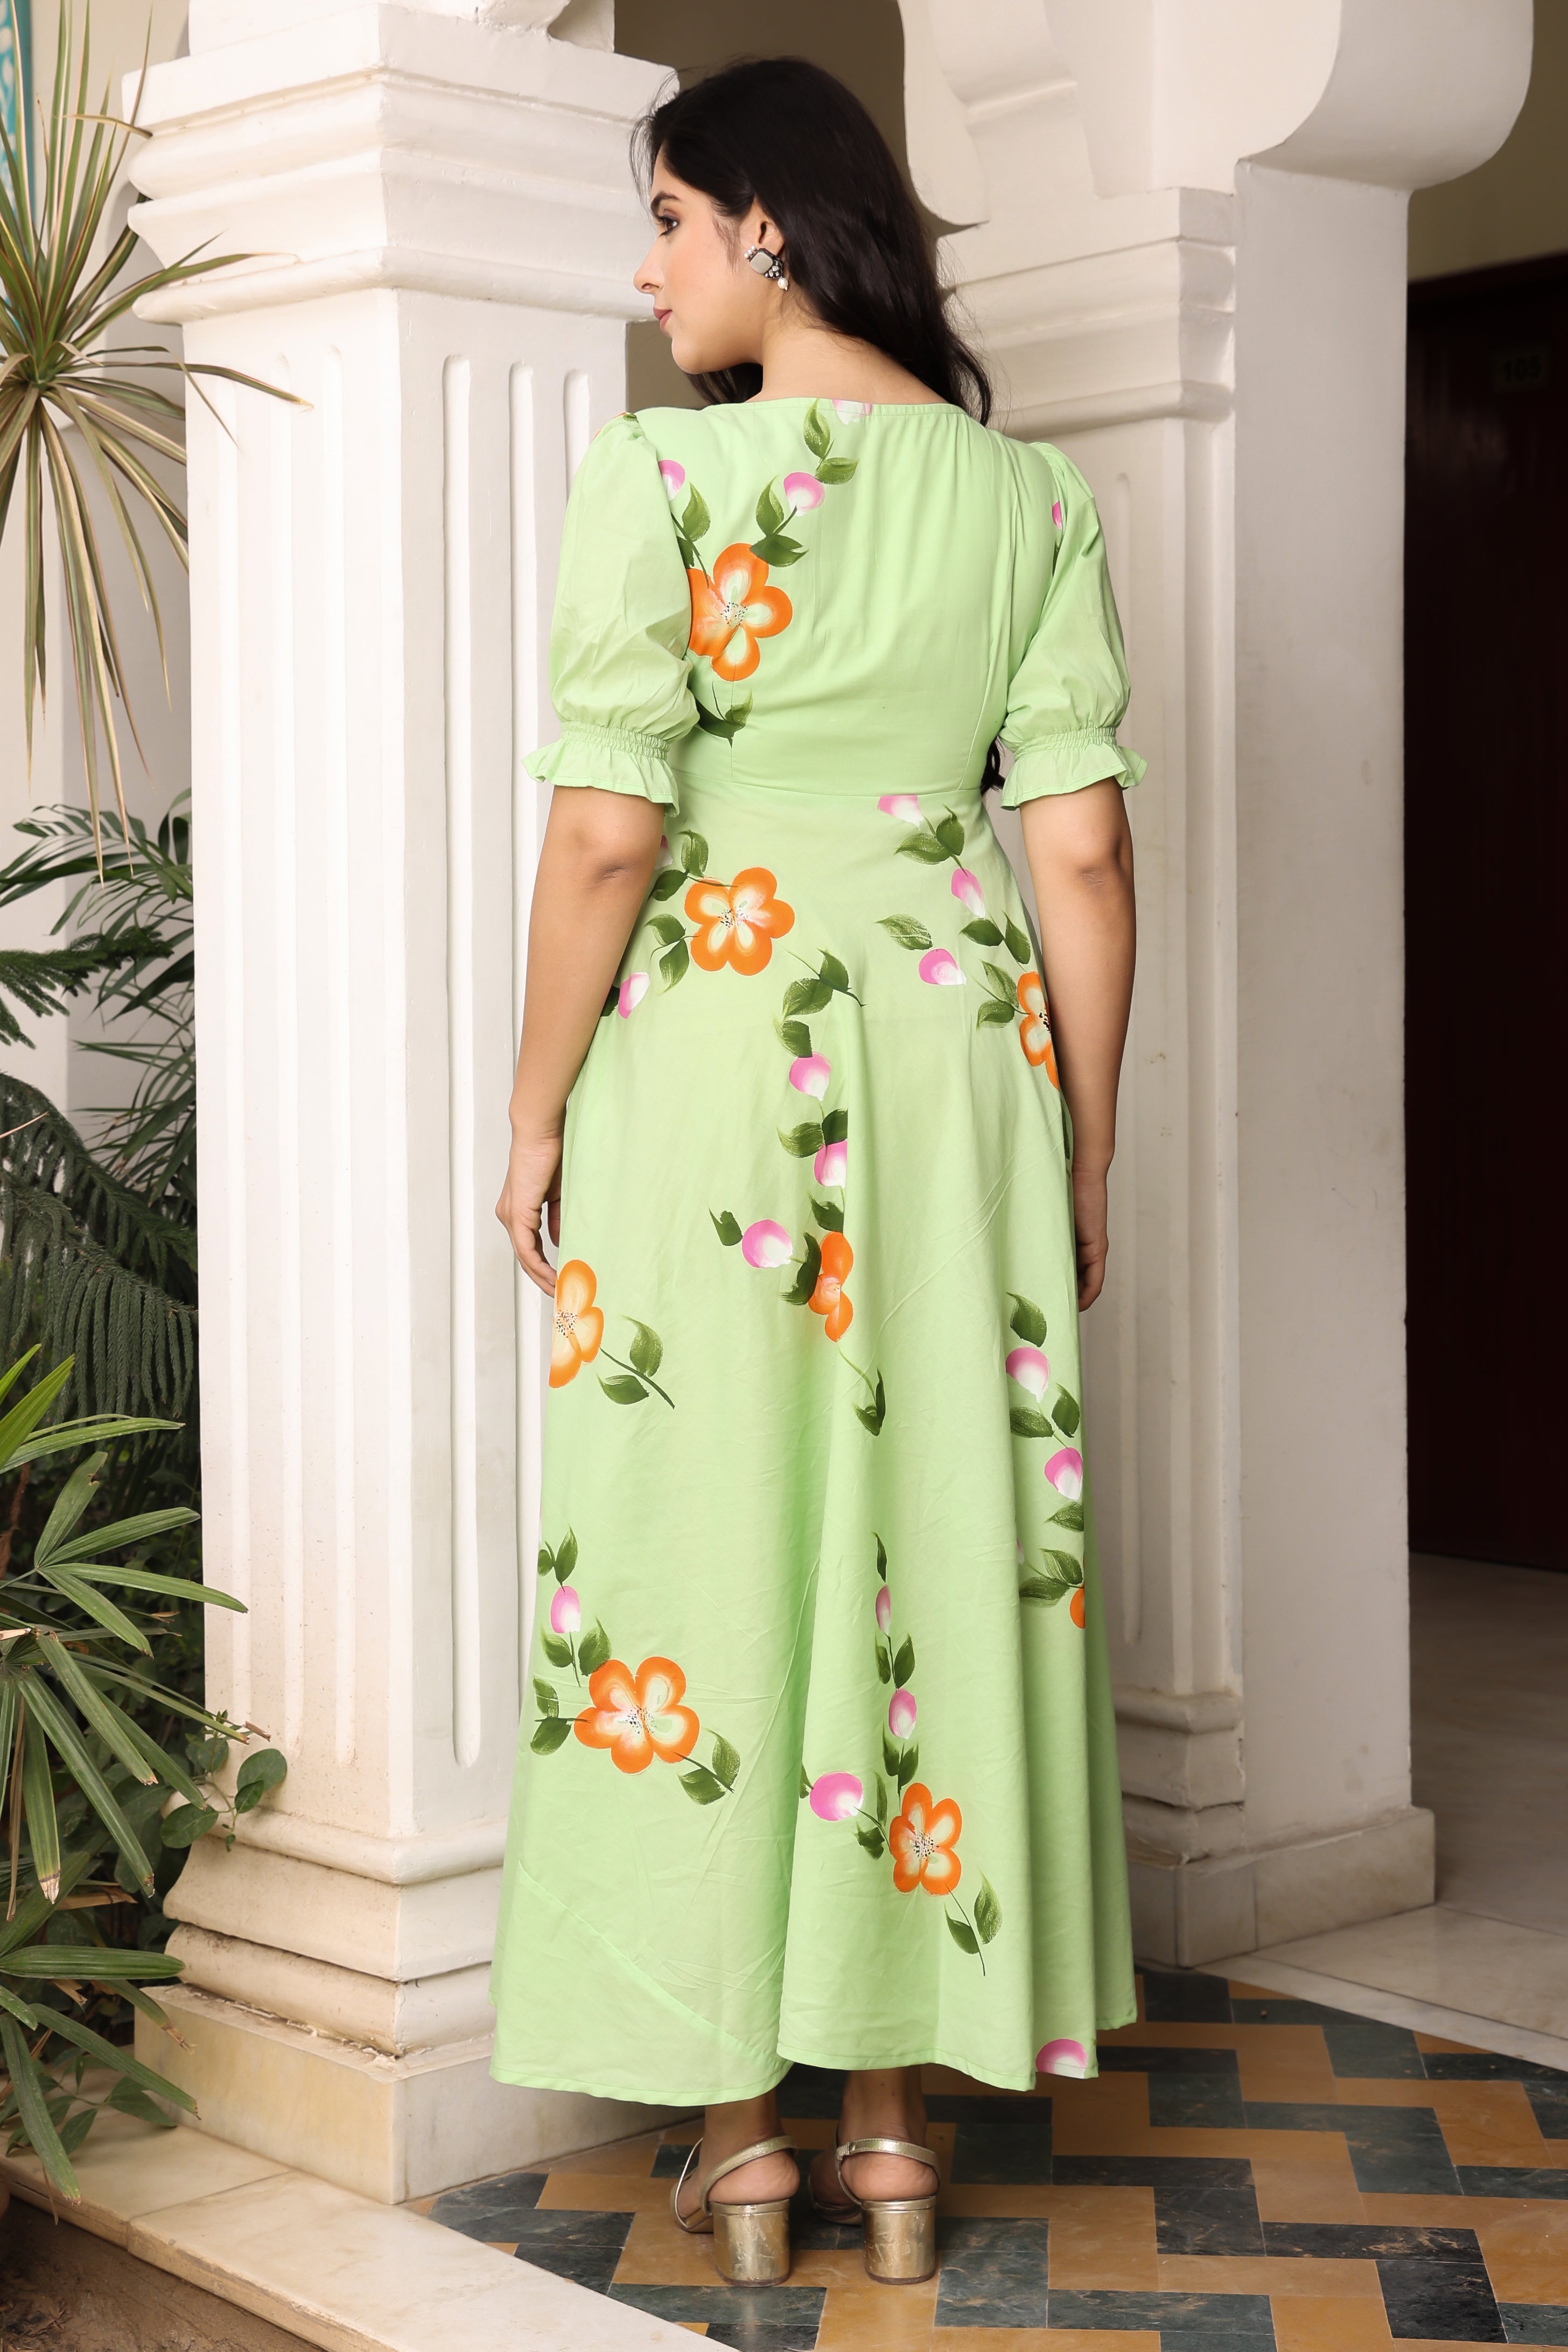 Women's Mint Green Hand Painted Flared Cotton Dress - Hatheli